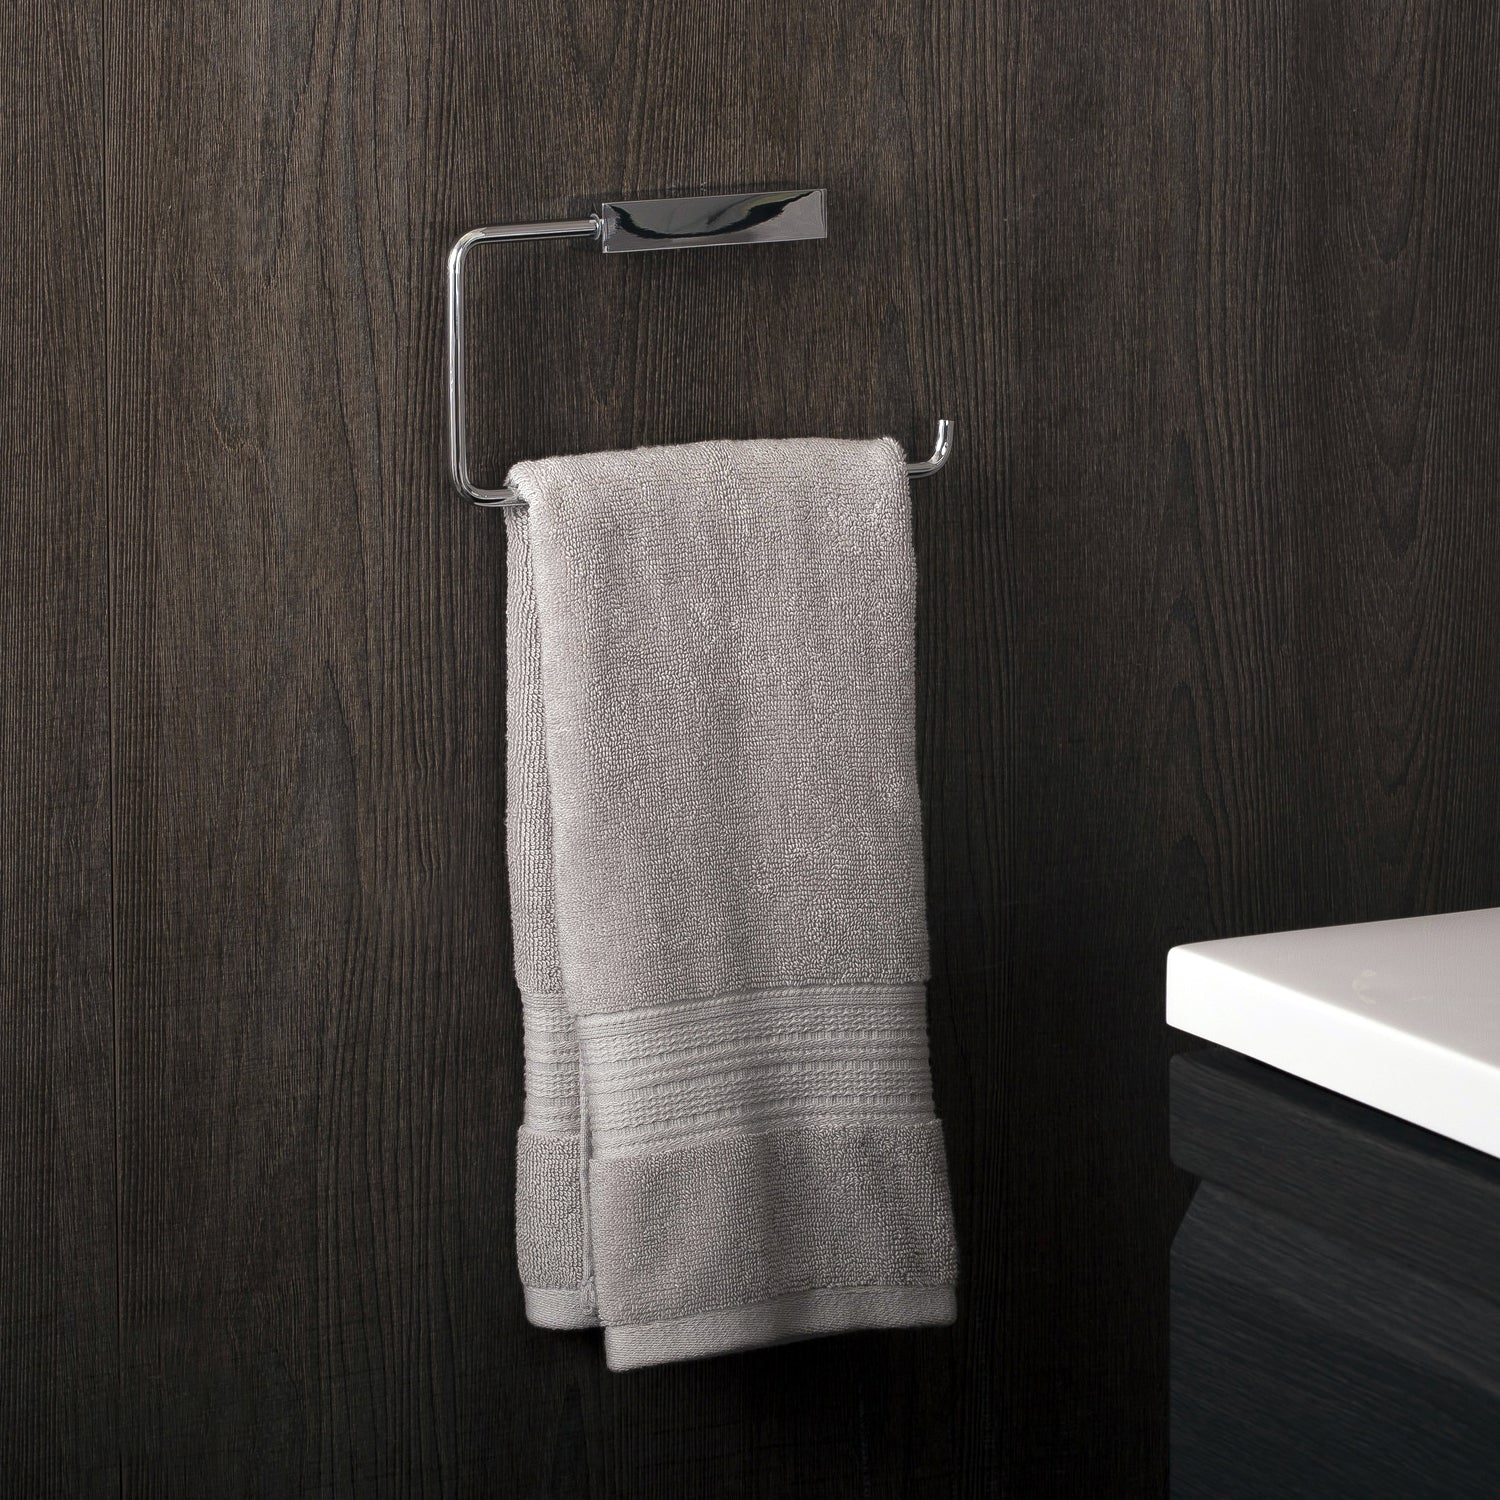 COSMIC Bathlife Towel Ring, Wall Mount, Brass Body, Chrome Finish, 9-1/16 x 4-1/2 x 1-3/16 Inches (2290171)